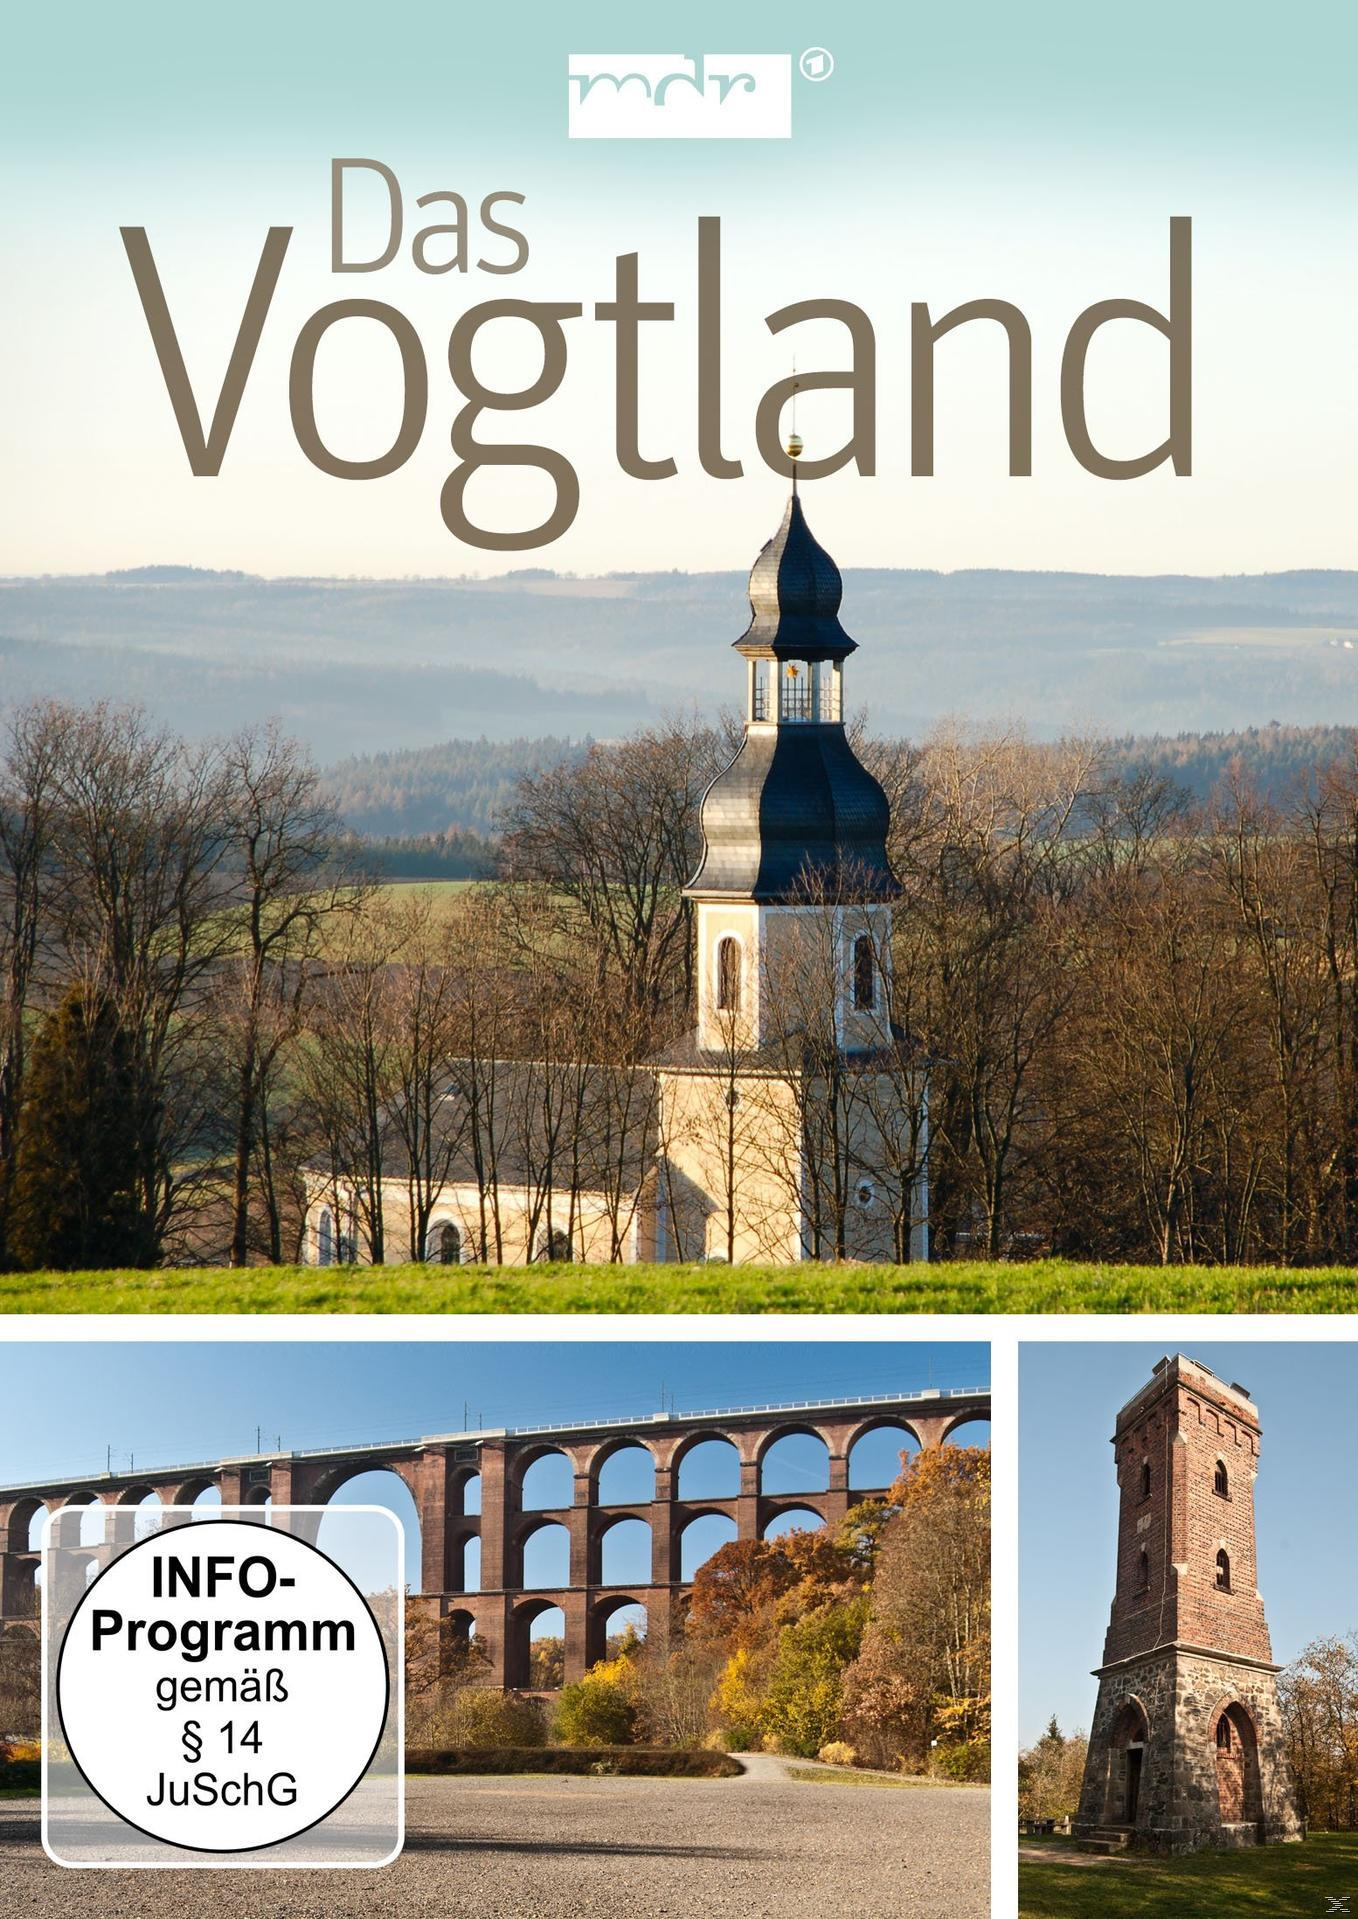 Vogtland DVD Das